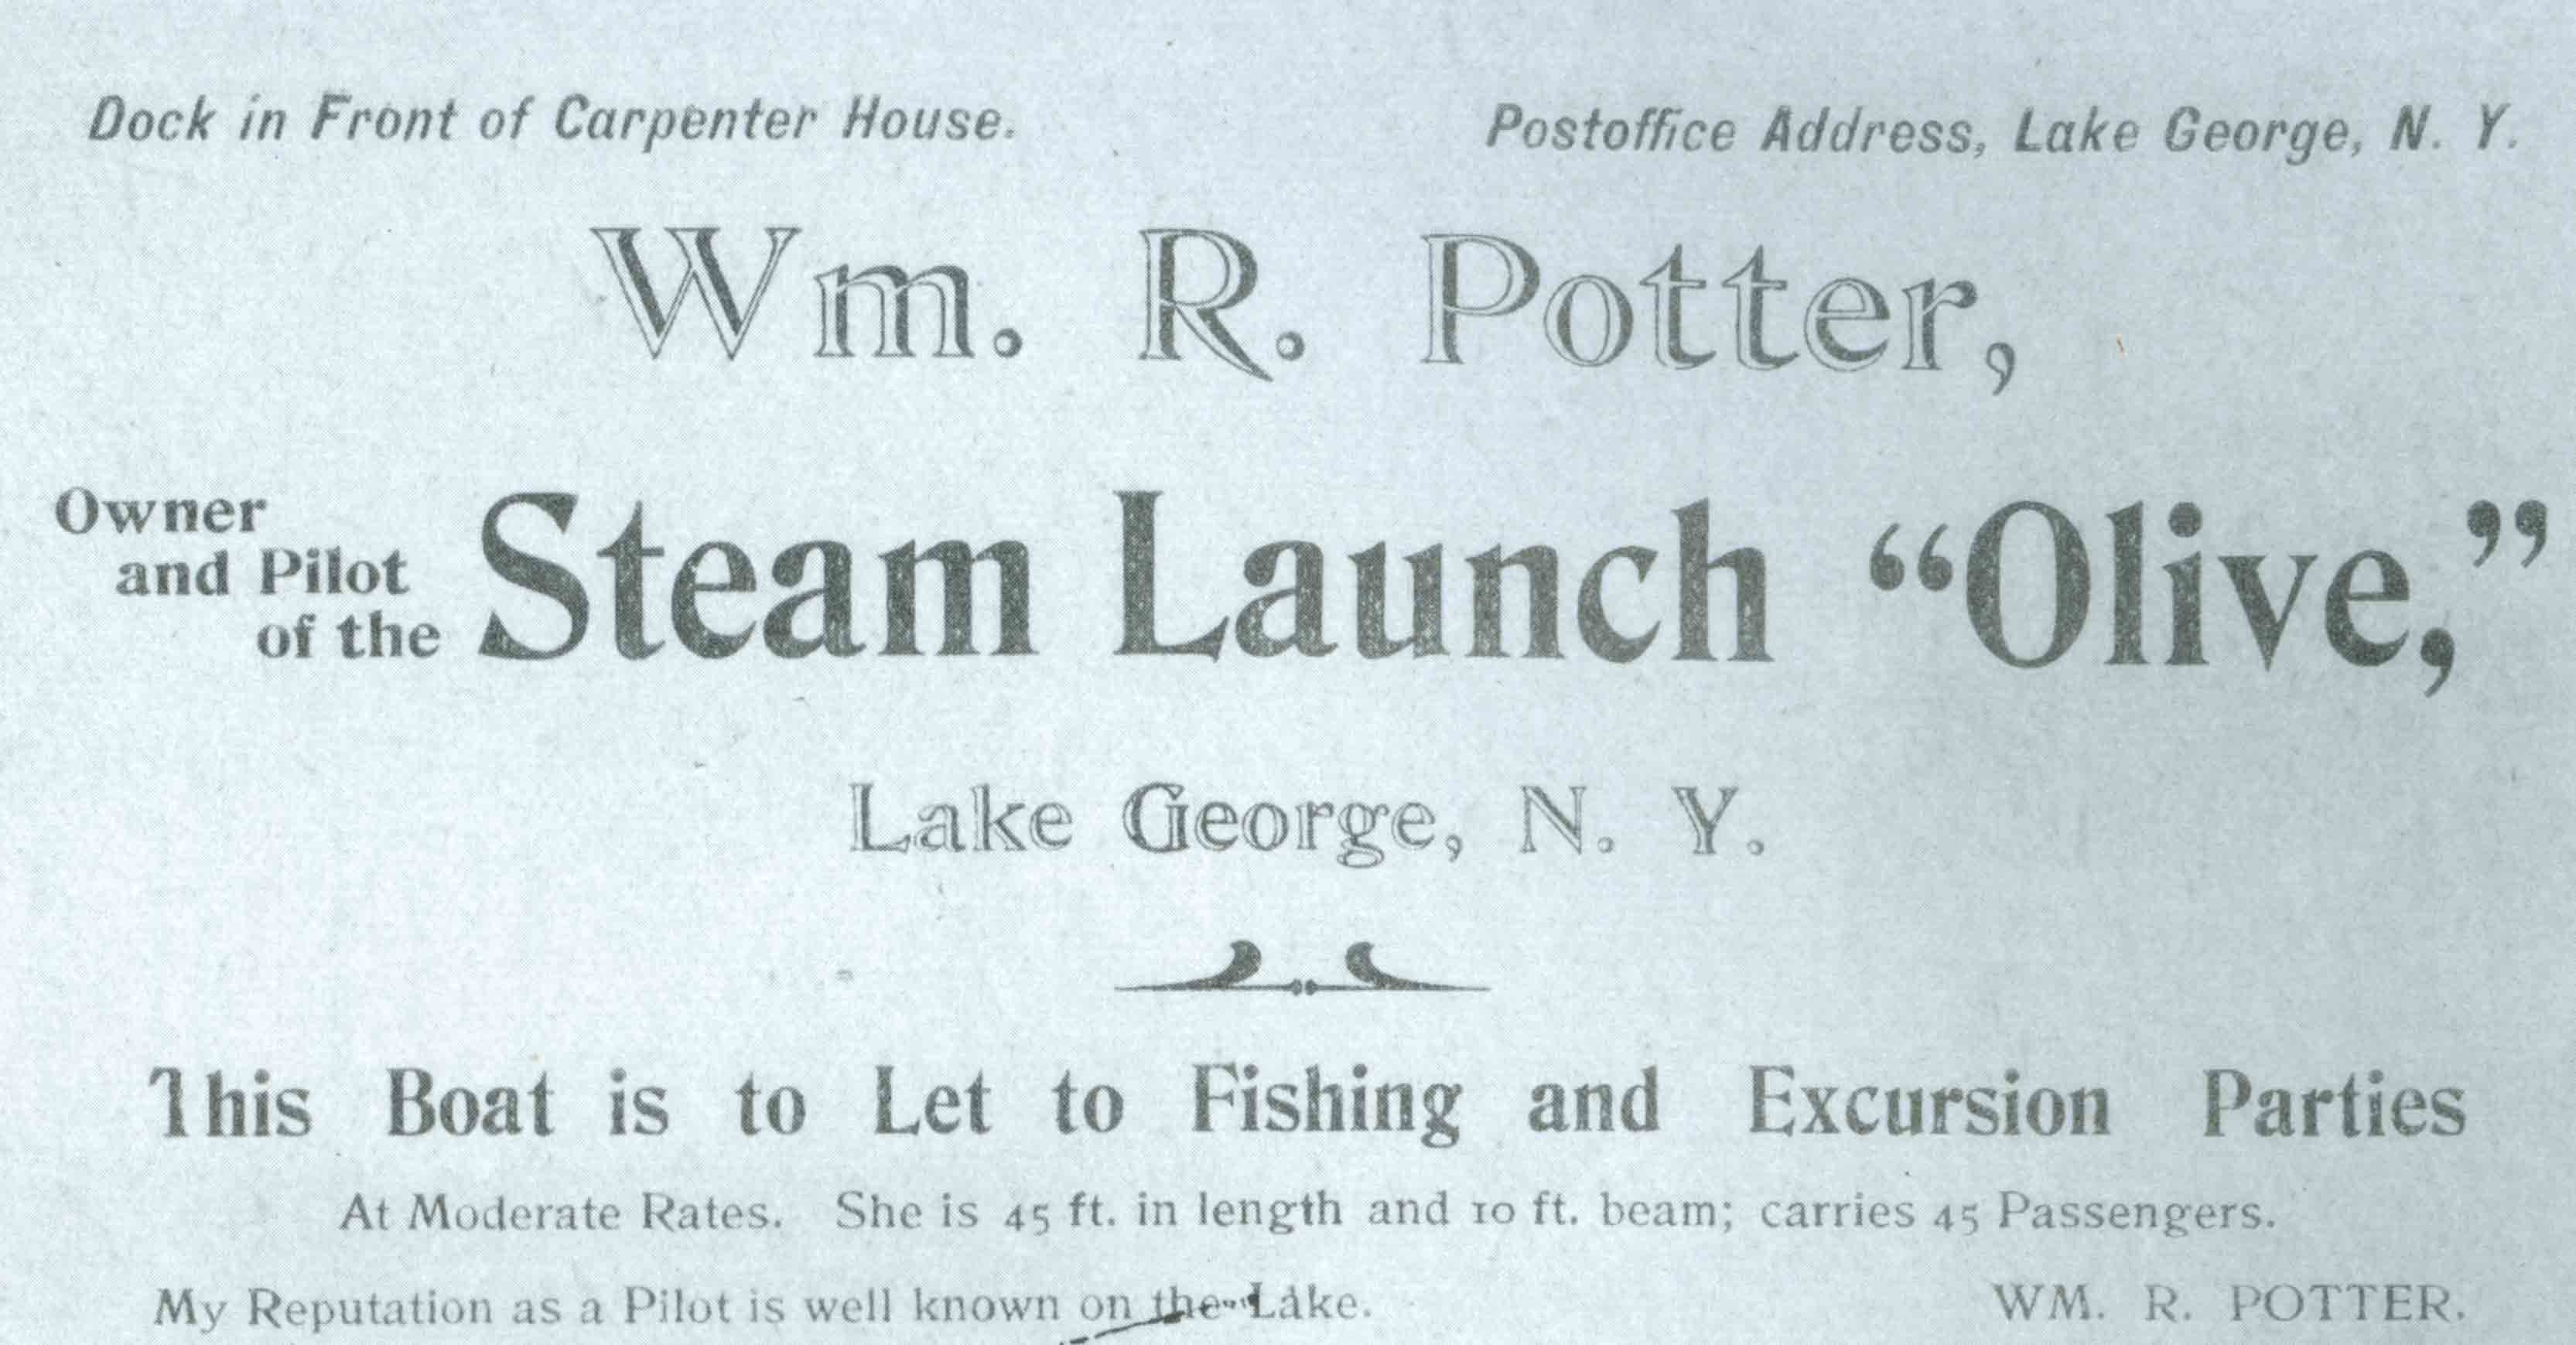 Wm. R. Potter Advertisement, c. 1894